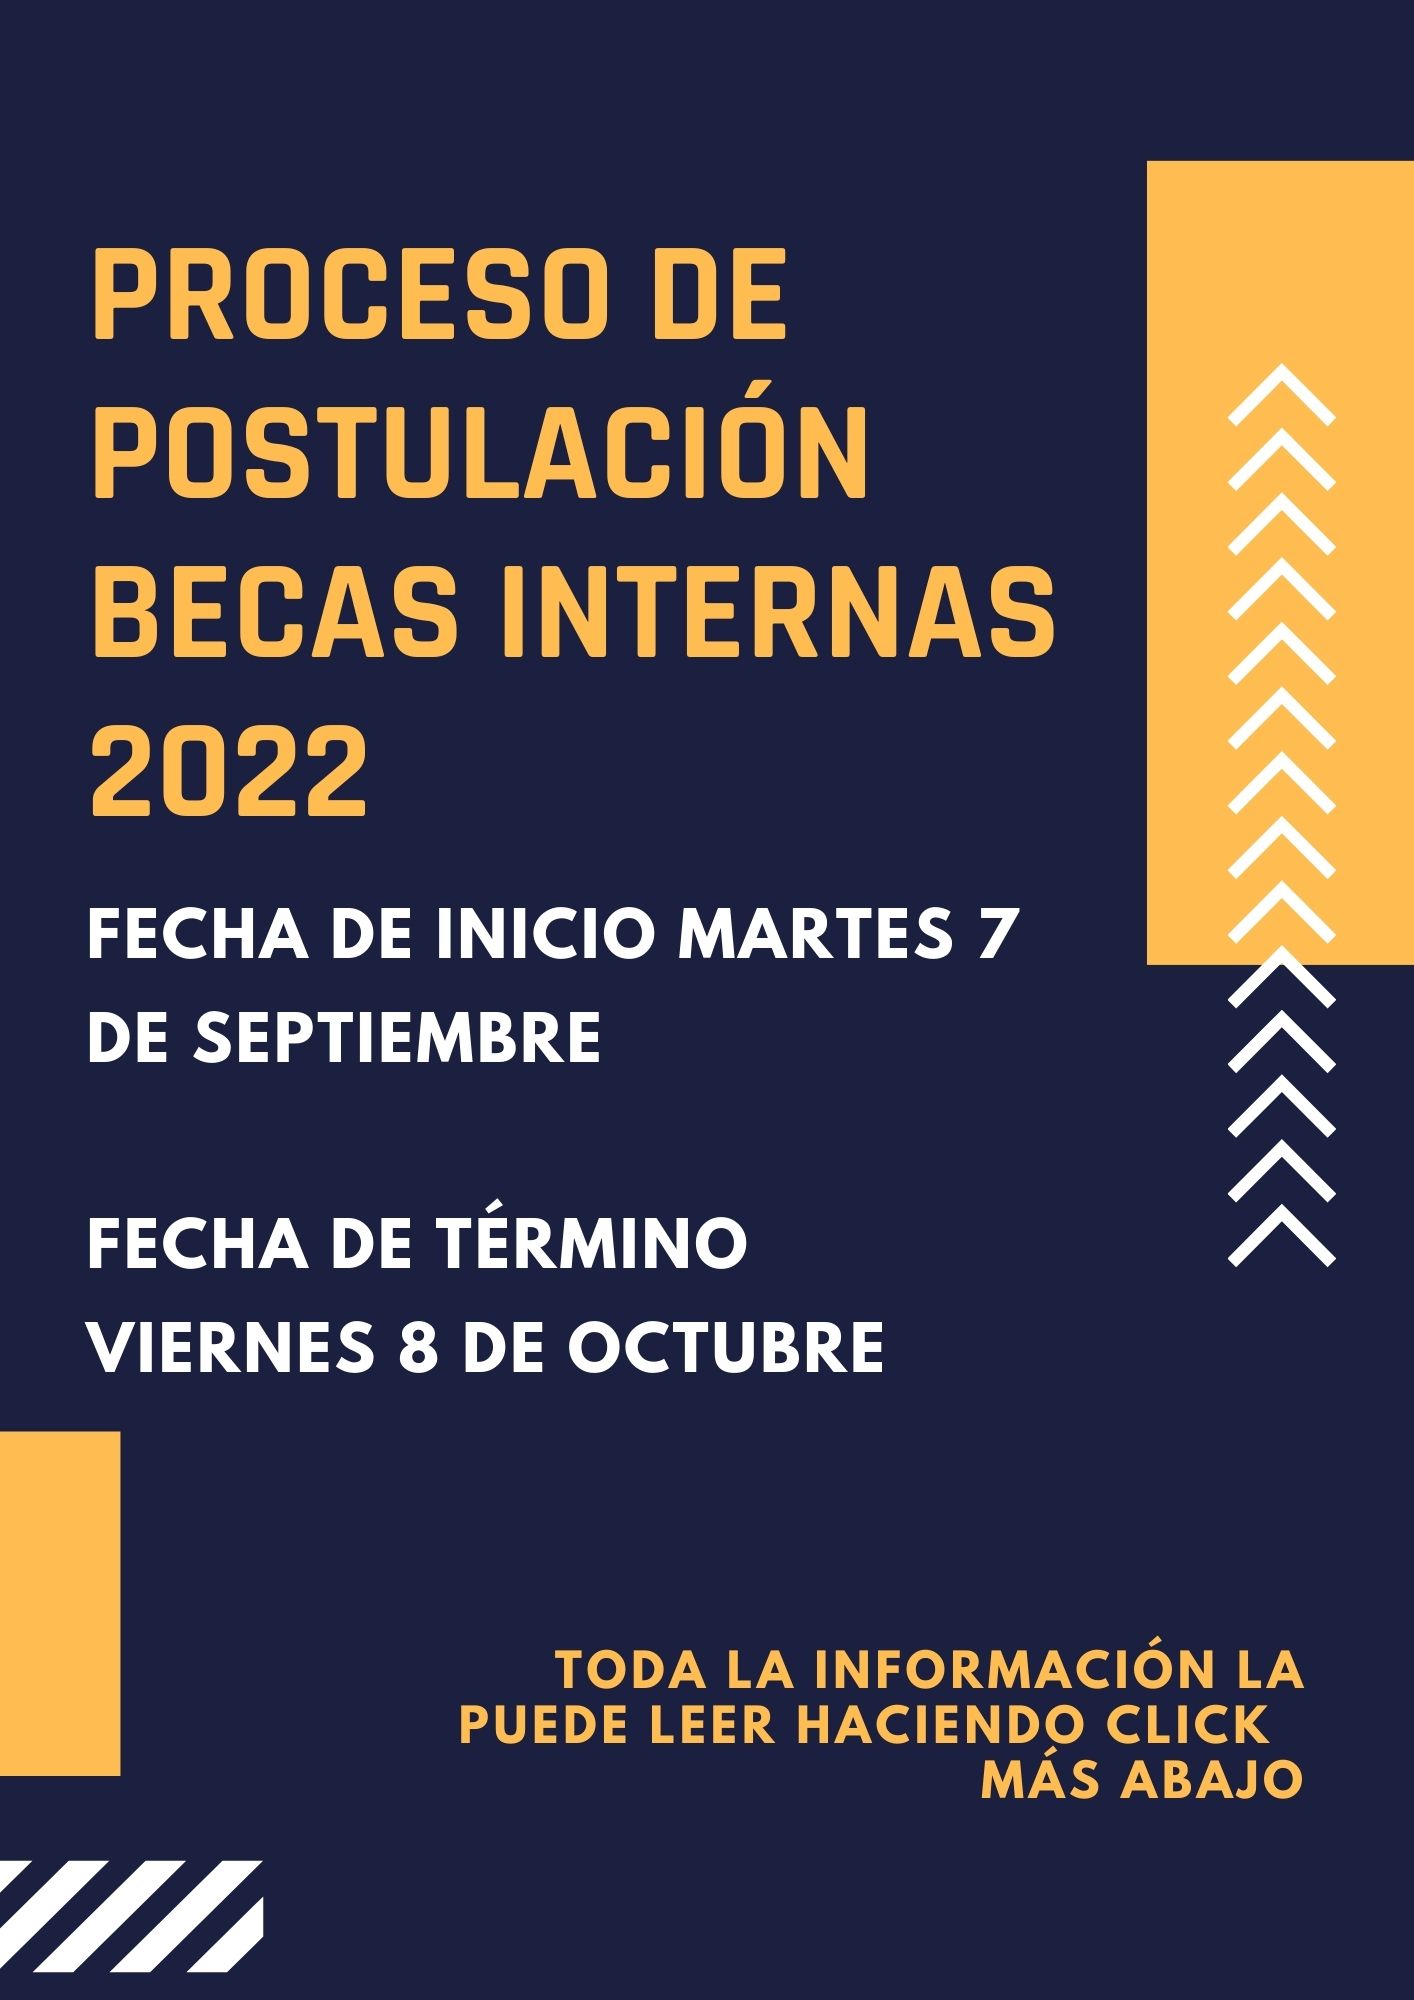 PROCESO DE POSTULACIÓN BECAS INTERNAS 2022